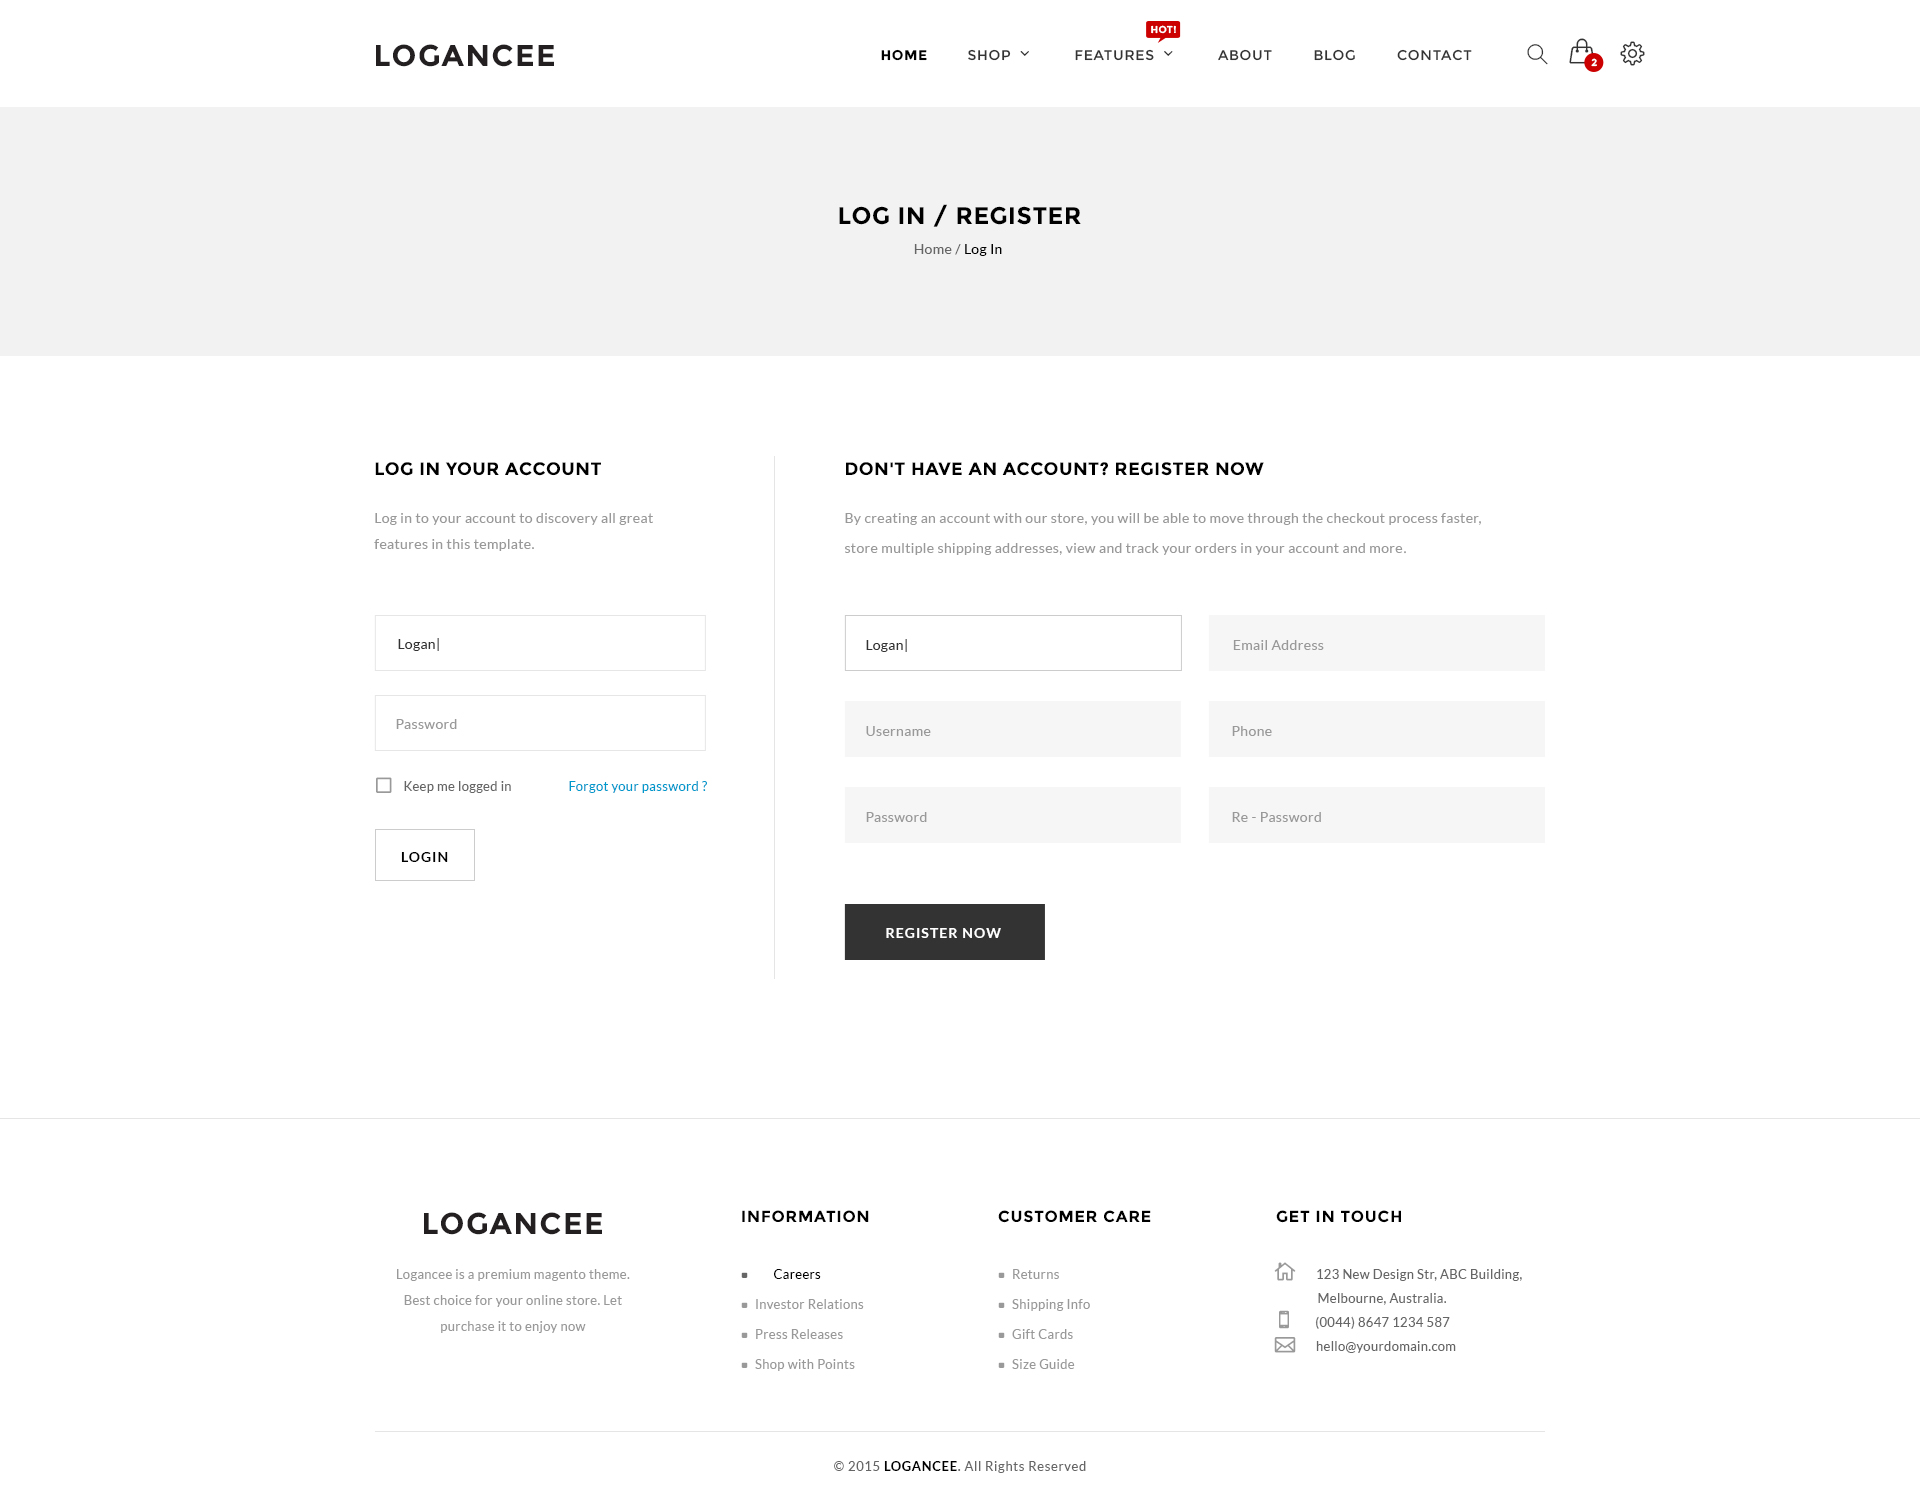 Logancee - Mutilpurpose eCommerce PSD Template